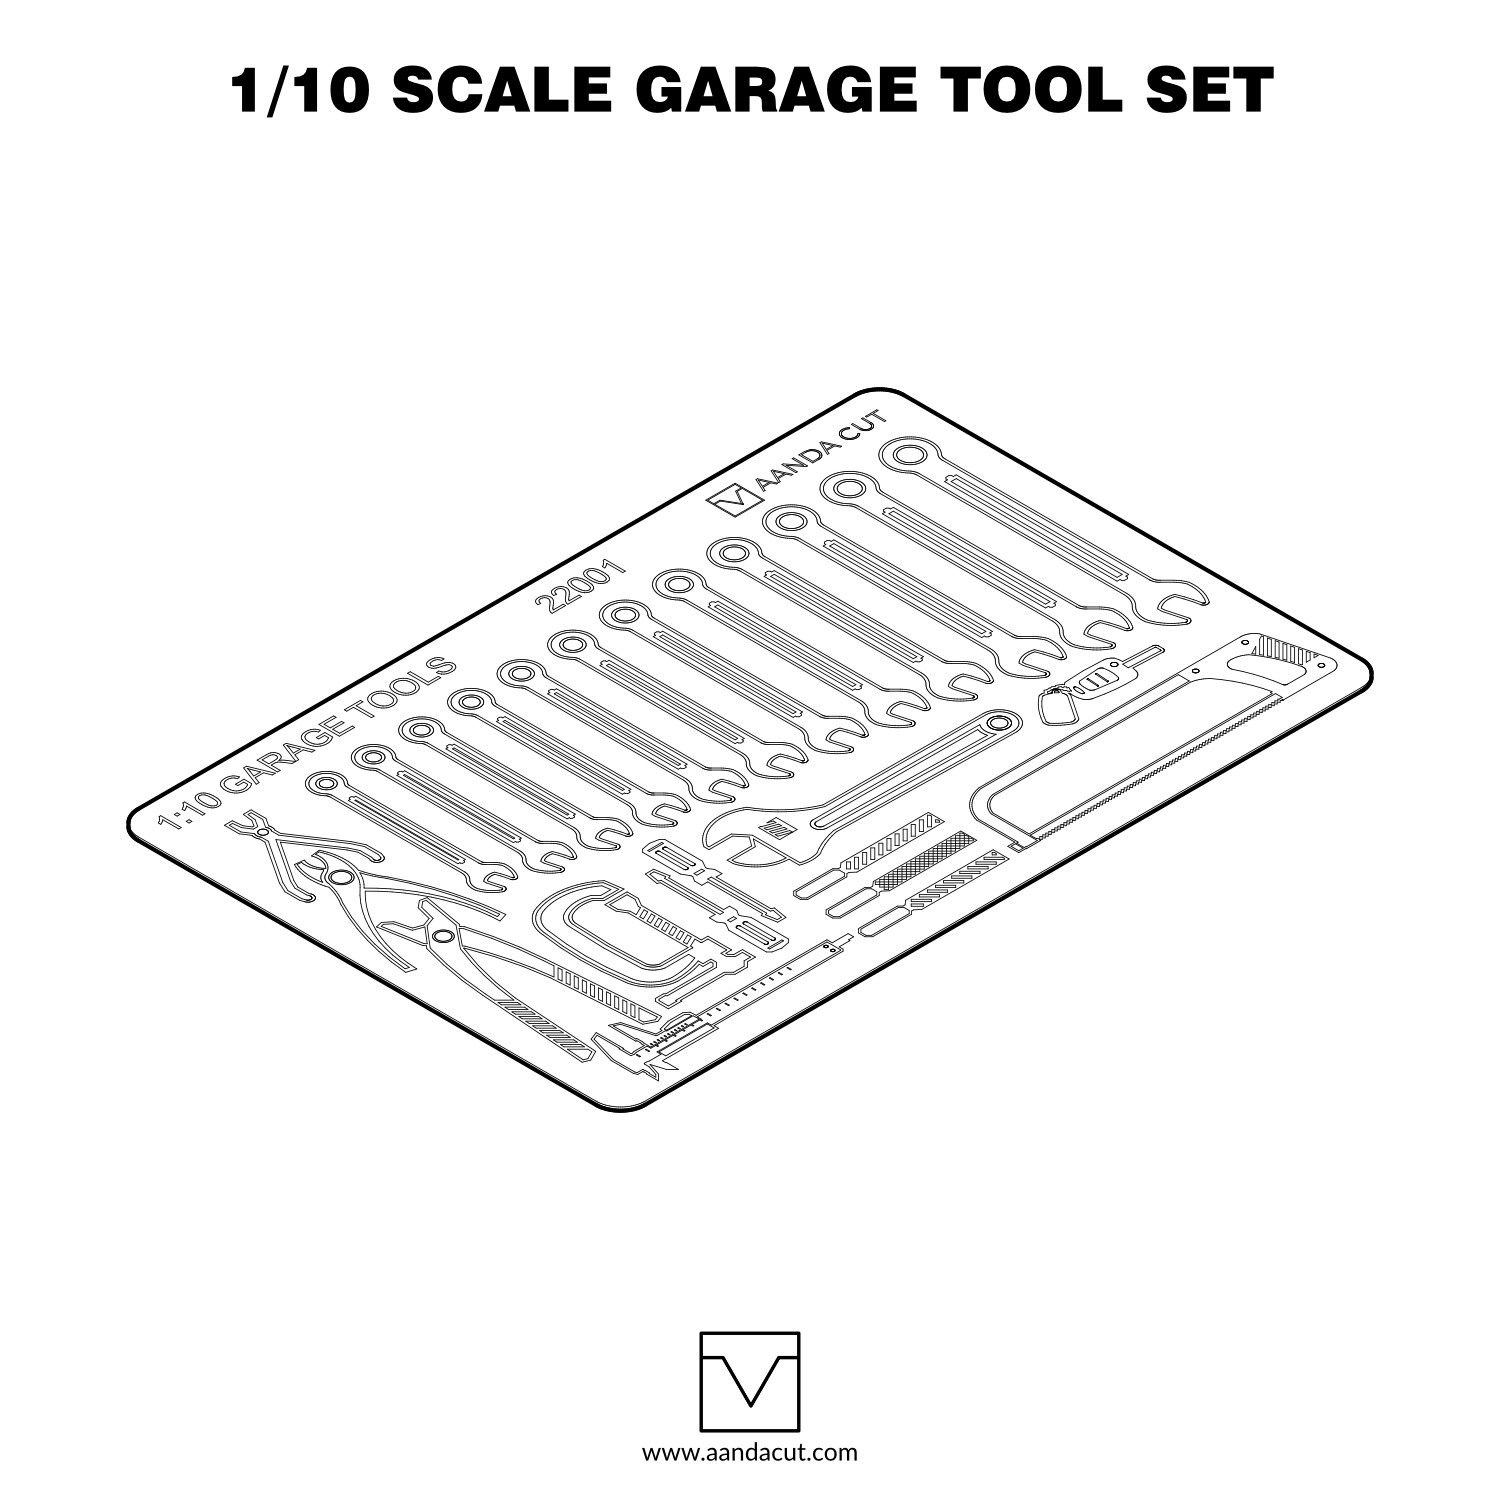 Aanda Cut 1/10 scale garage tool set